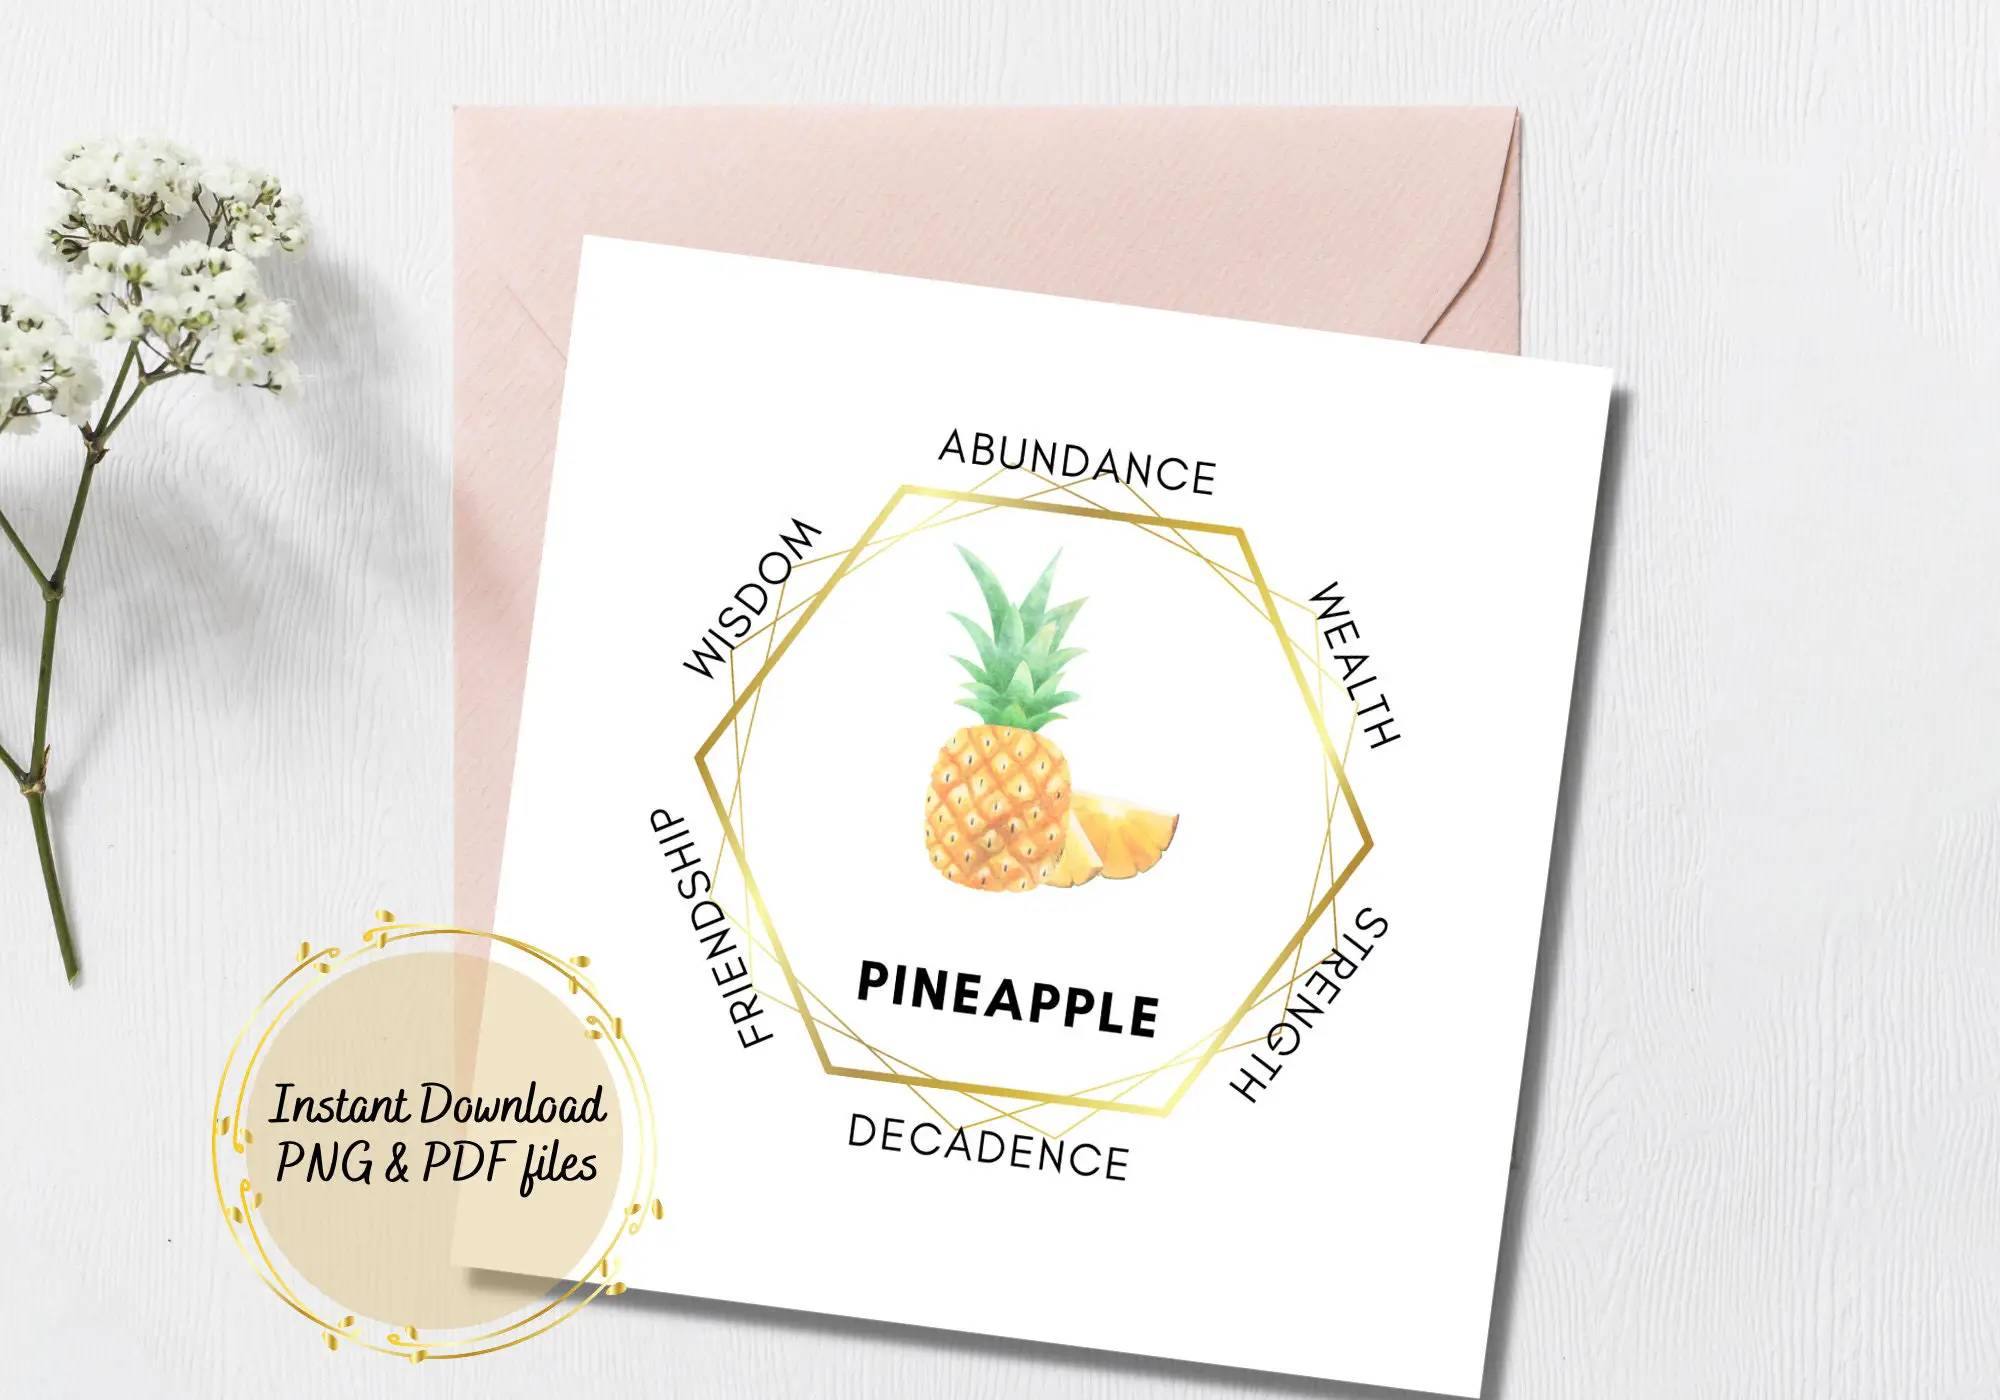 Pineapple As A Symbol Of Abundance